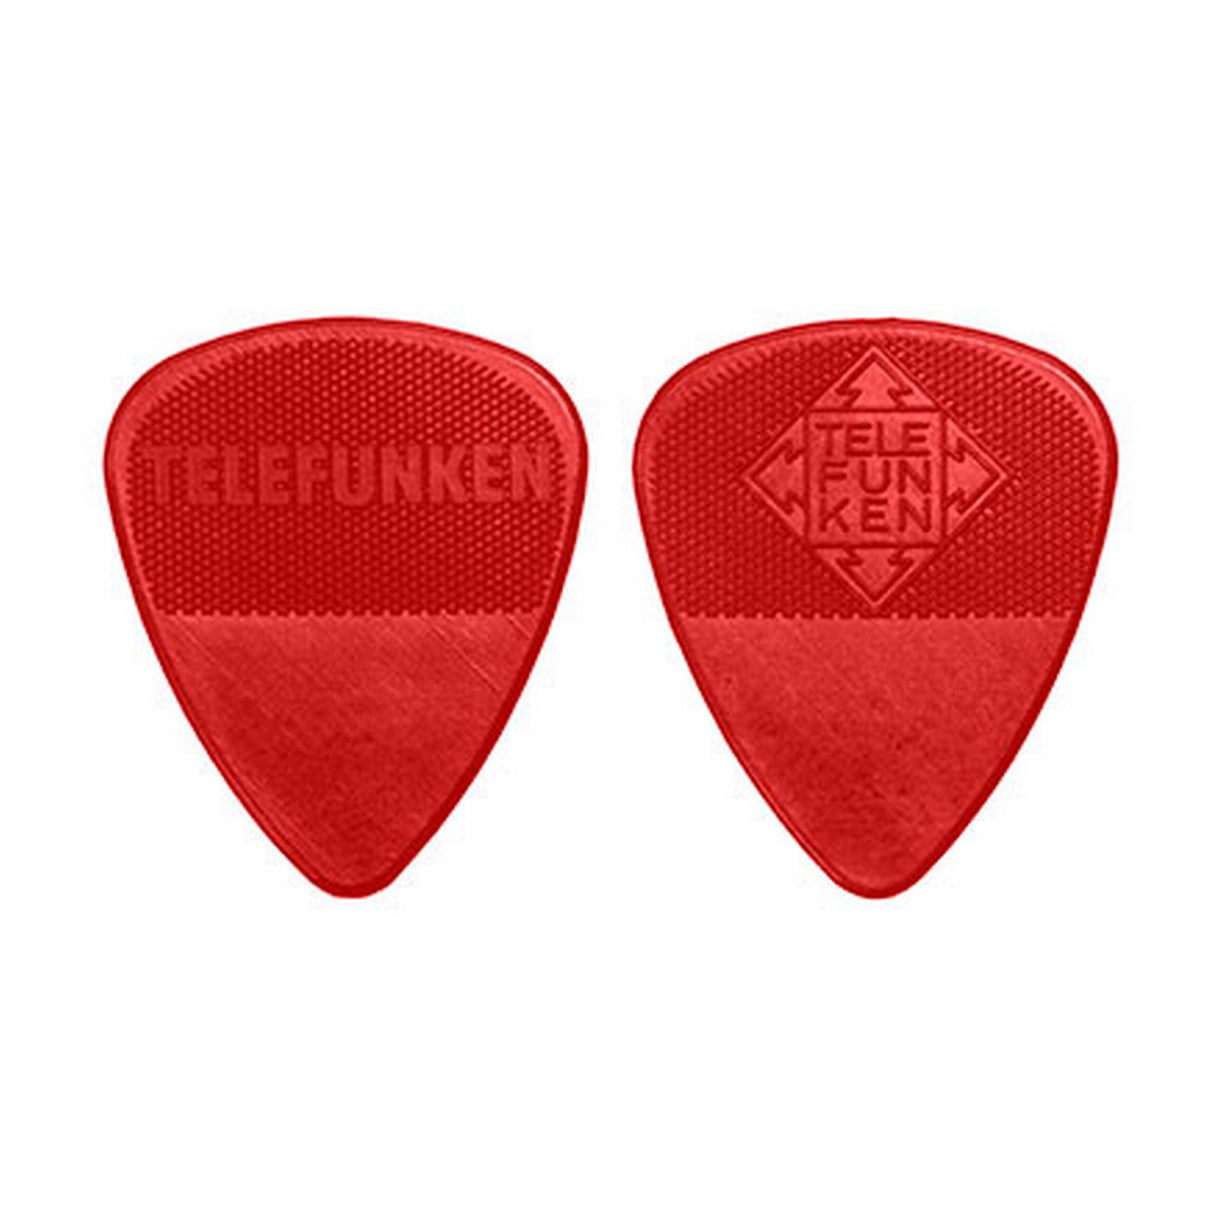 Telefunken 1mm Diamond 6 Pack Thin Guitar Picks, Red